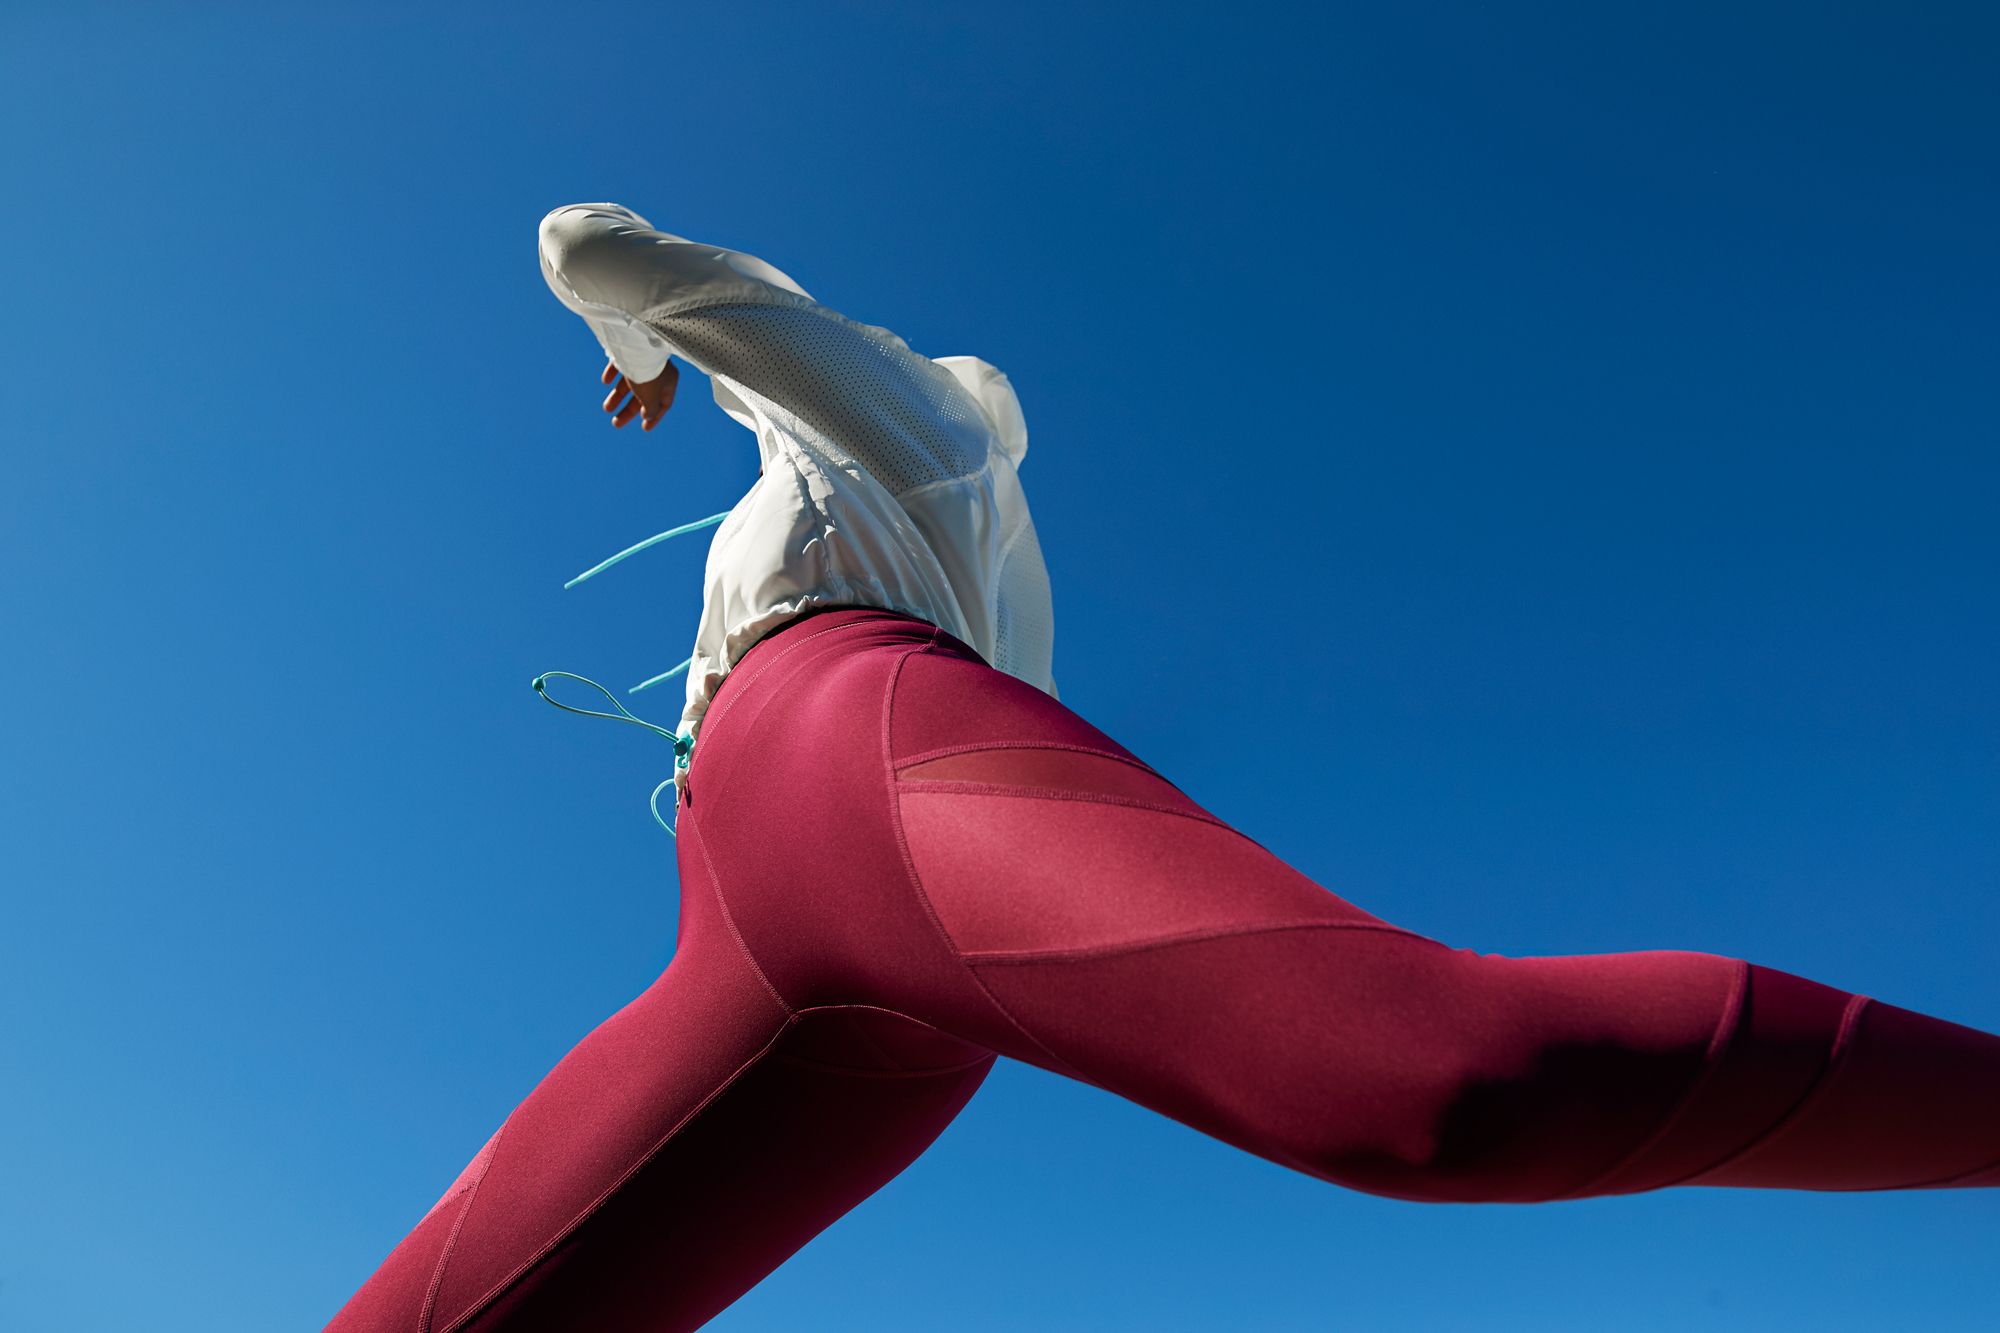 WODOWEI Women’s High Waisted Seamless Leggings Tummy Control Gym Workout Yoga Pants